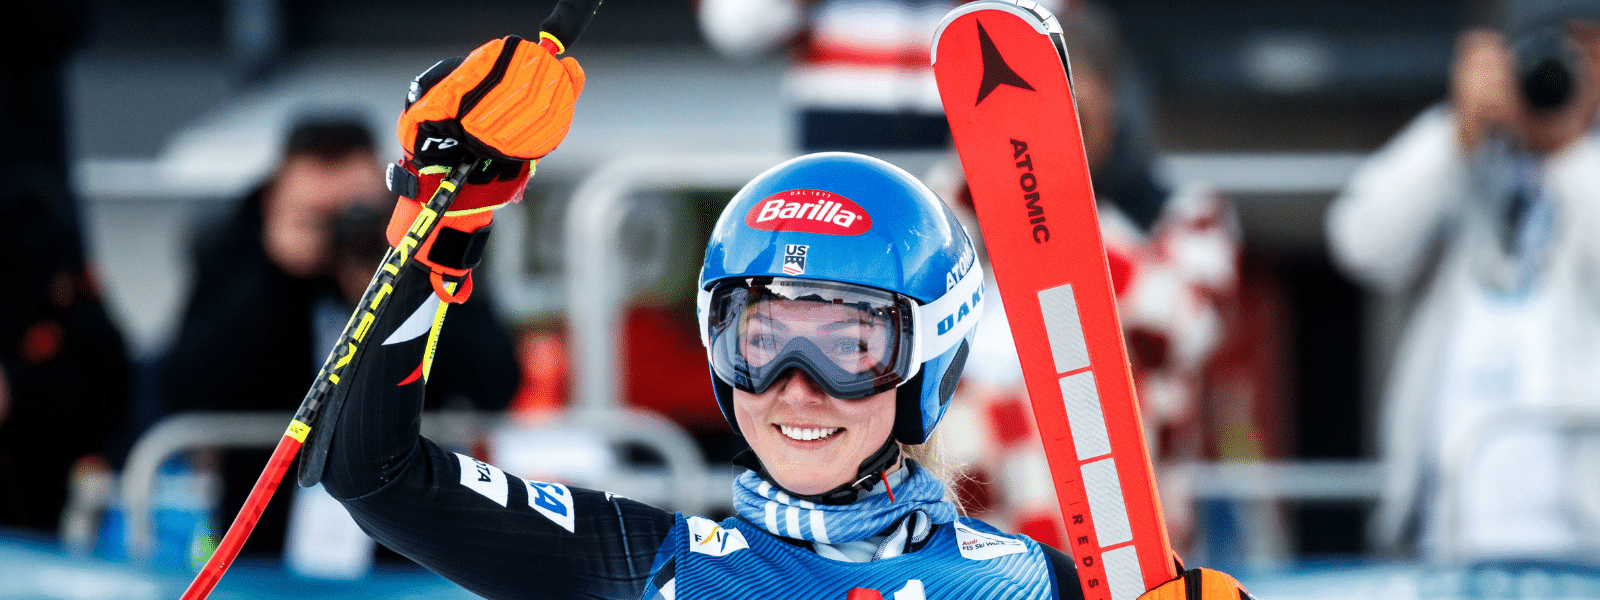 Mikaela Shiffrin Aiming To Smash Giant Slalom Records At The Kranjska Gora World Cup